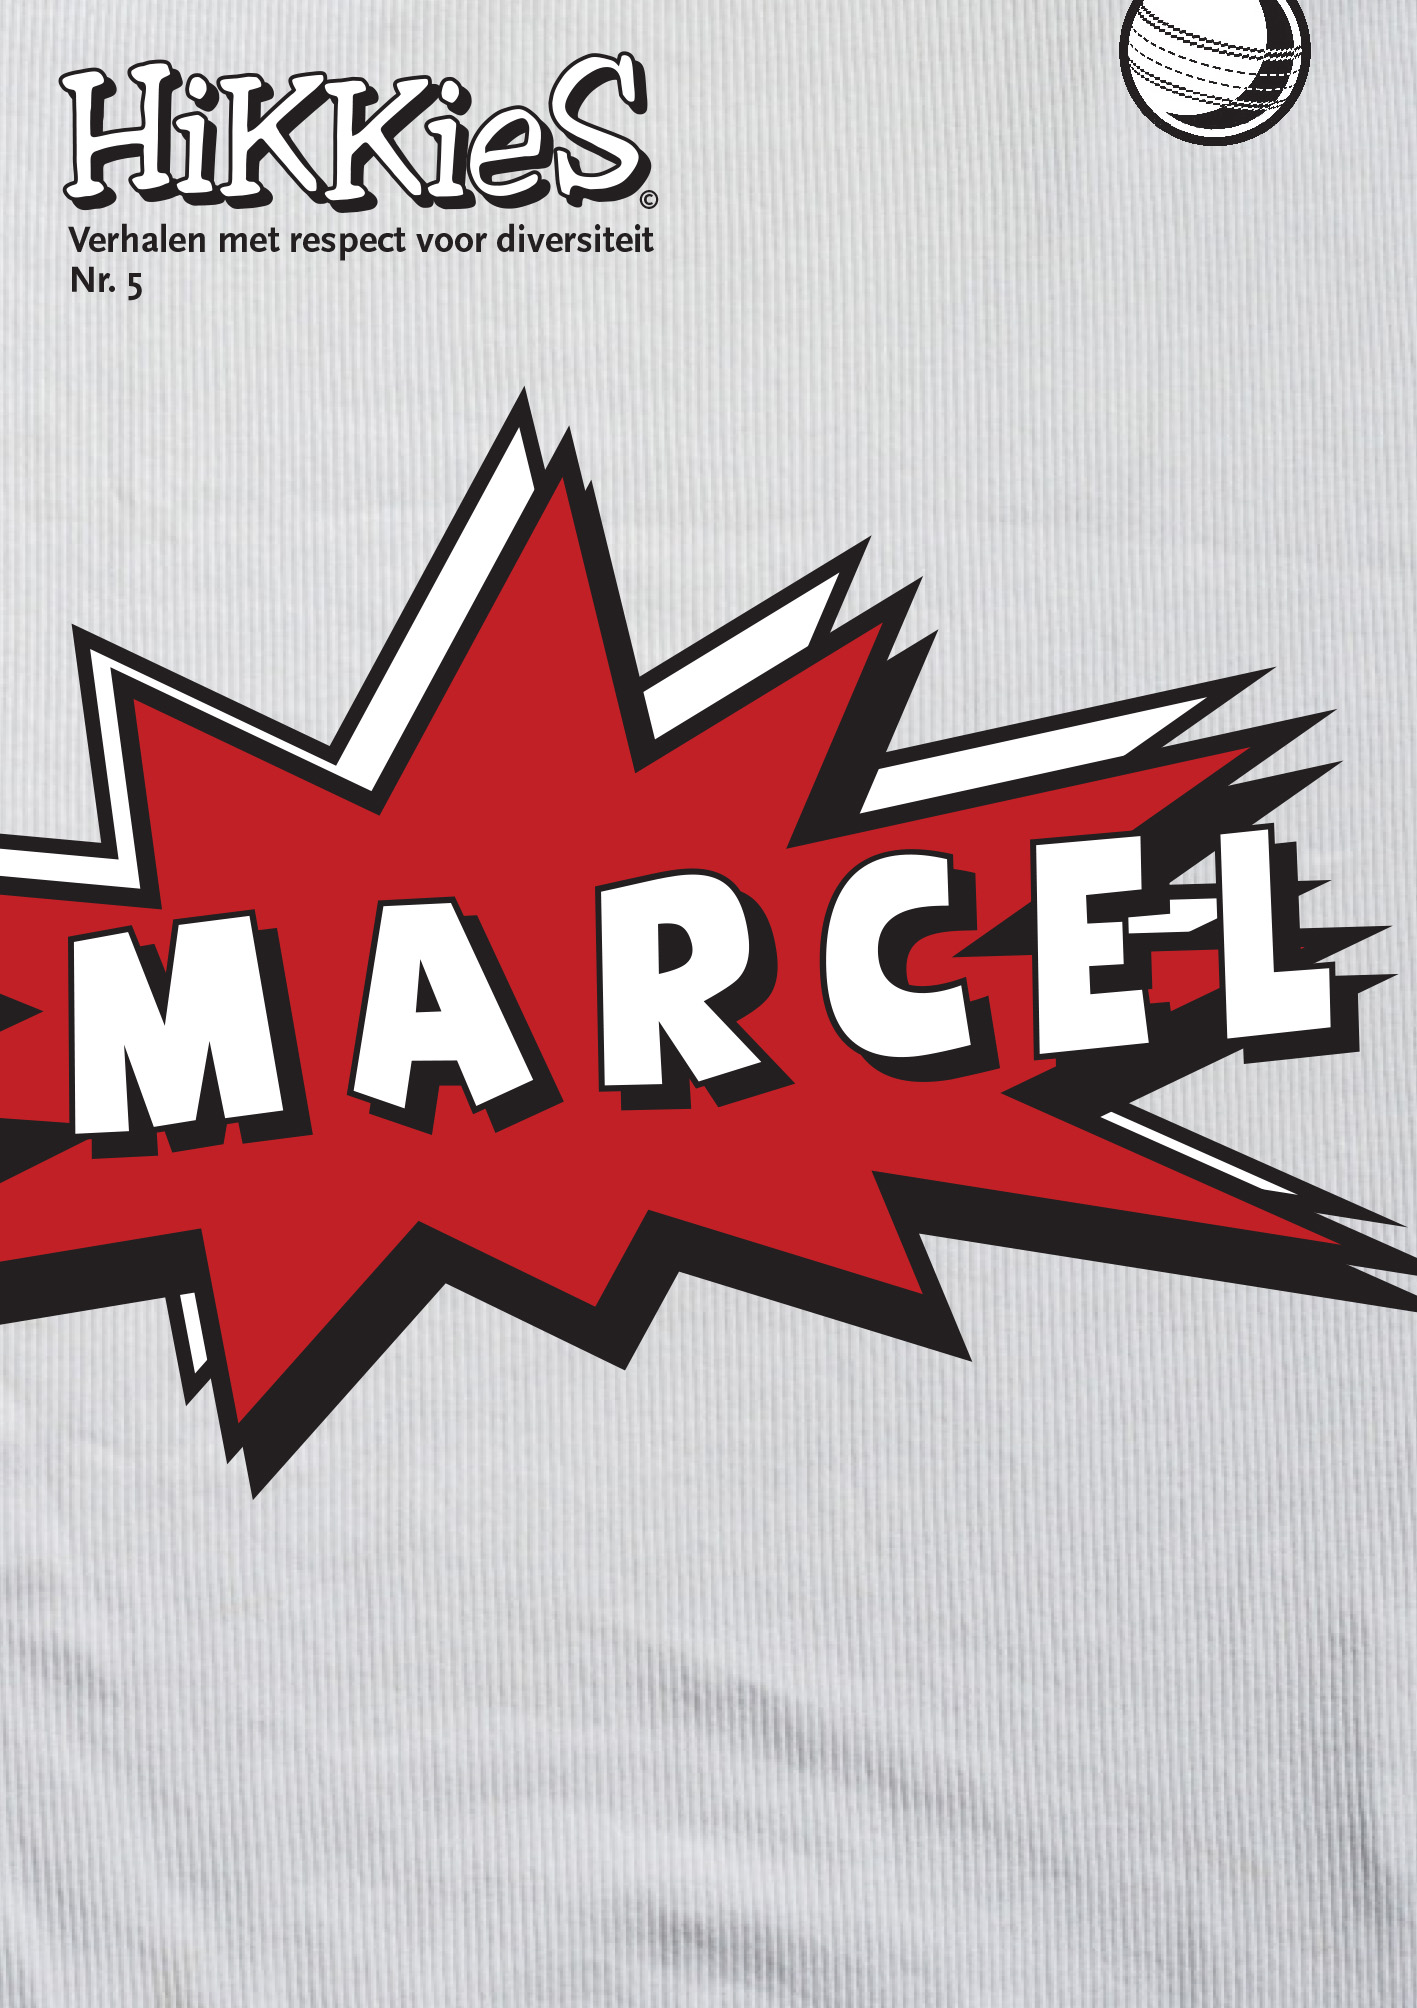 Marcel